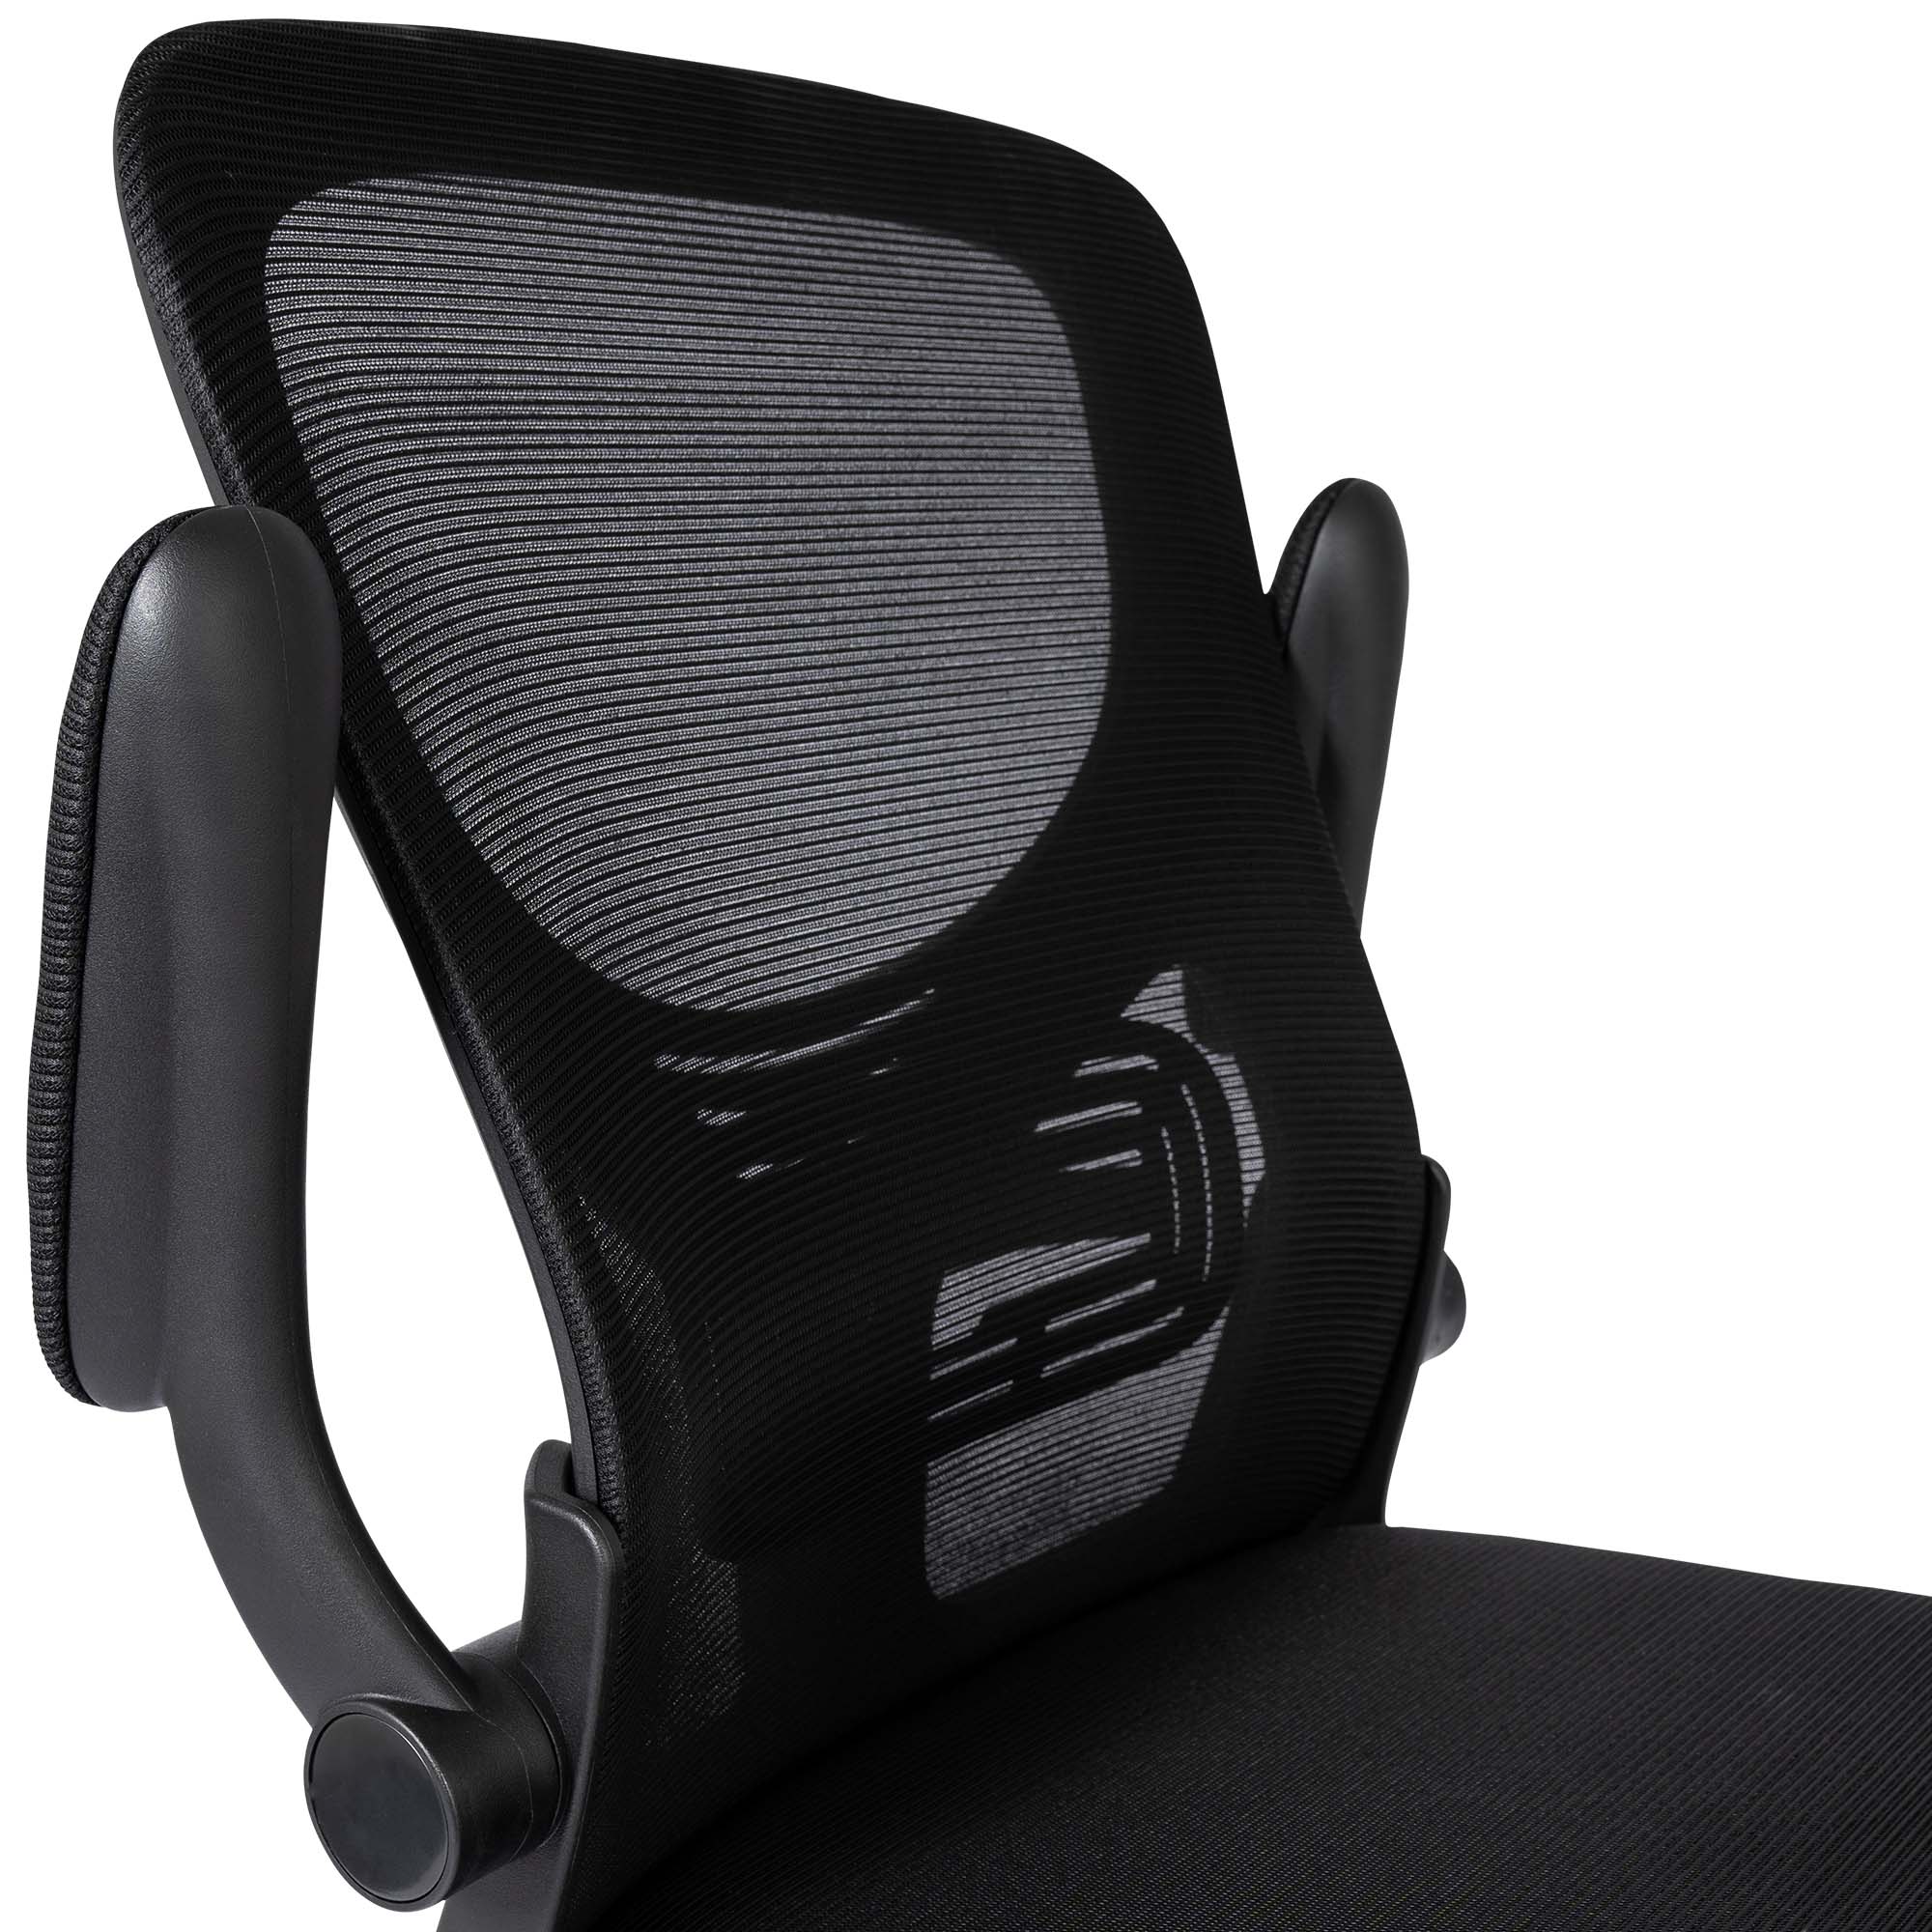 Ergodu Ergonomic Office Chair Foldable Armrests